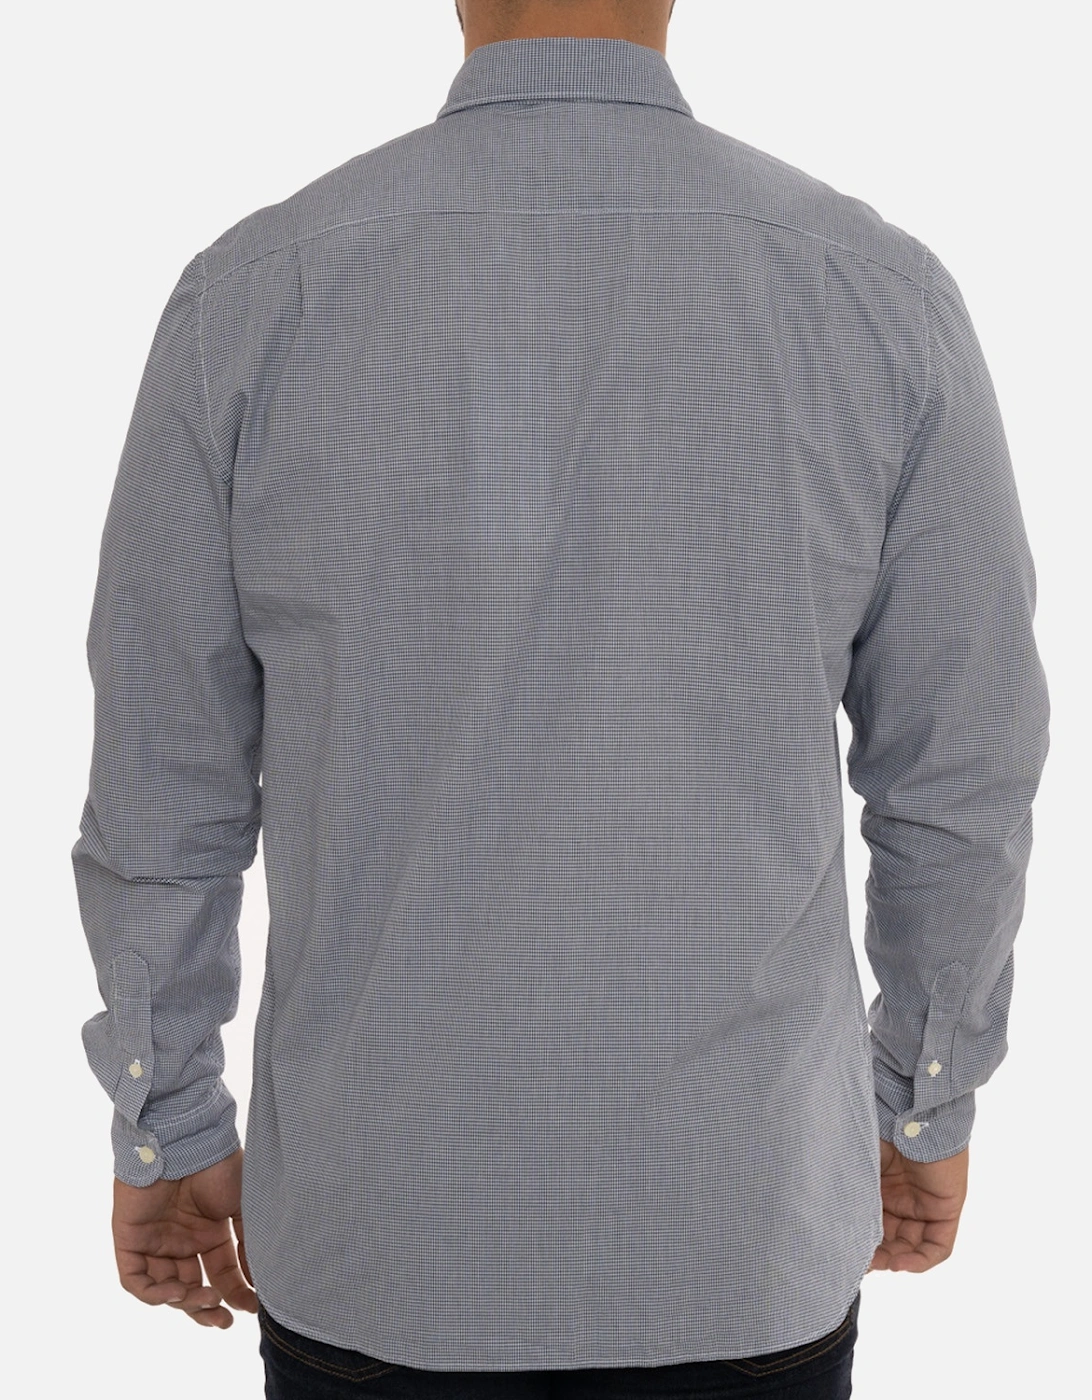 Mens Micro Check Shirt (Navy/White)